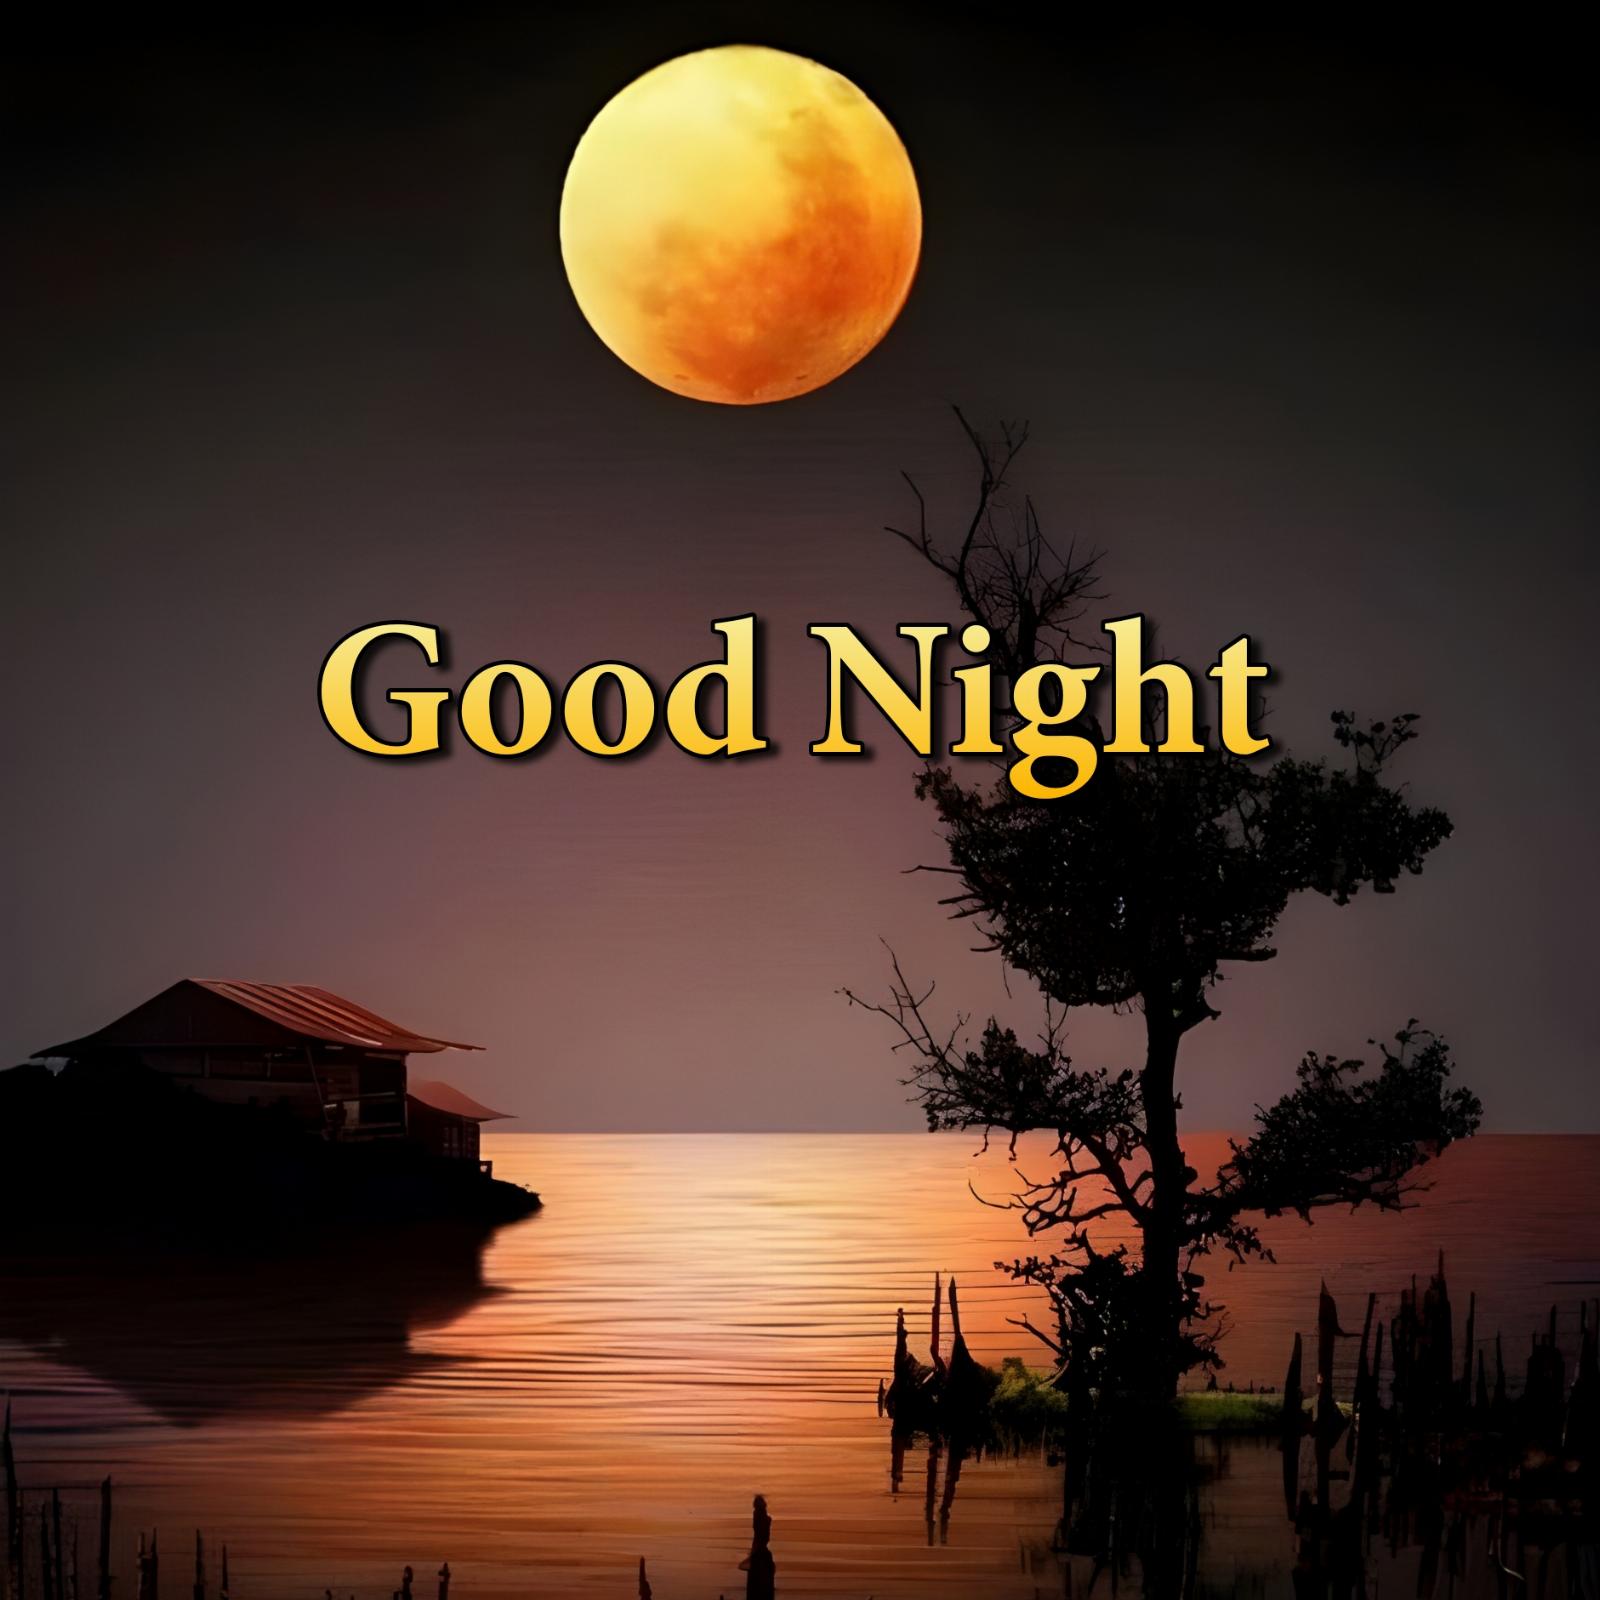 Good Night With Moon Image